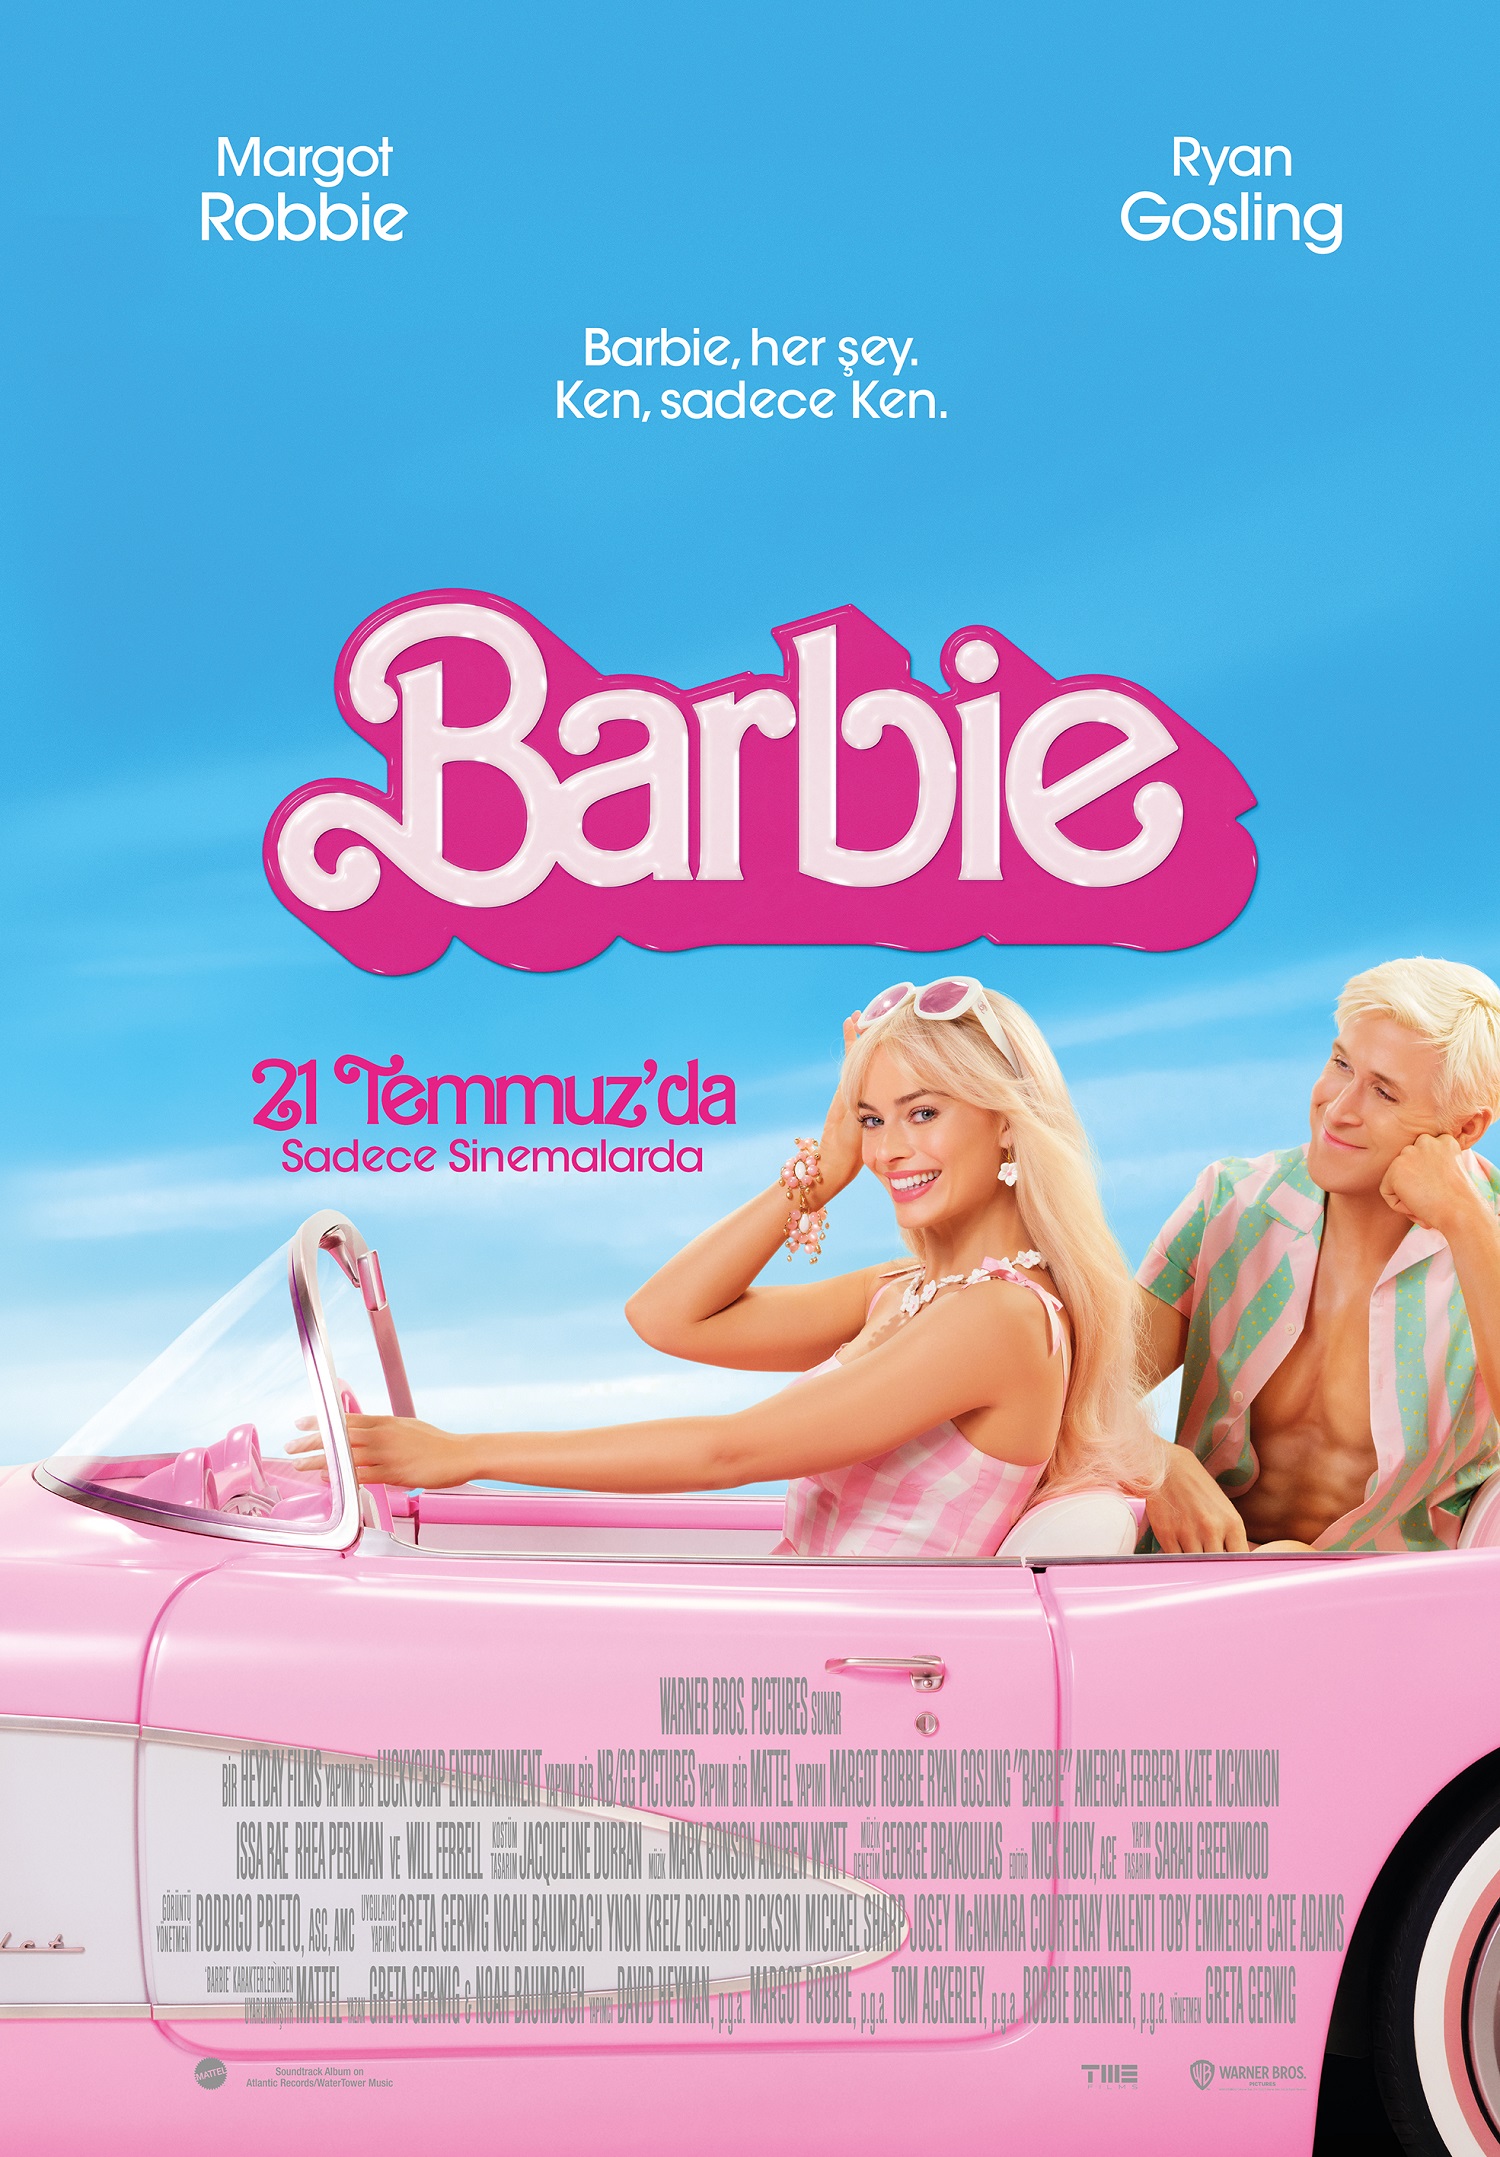 Barbie'nin bilinmeyenleri. Arakat Mag